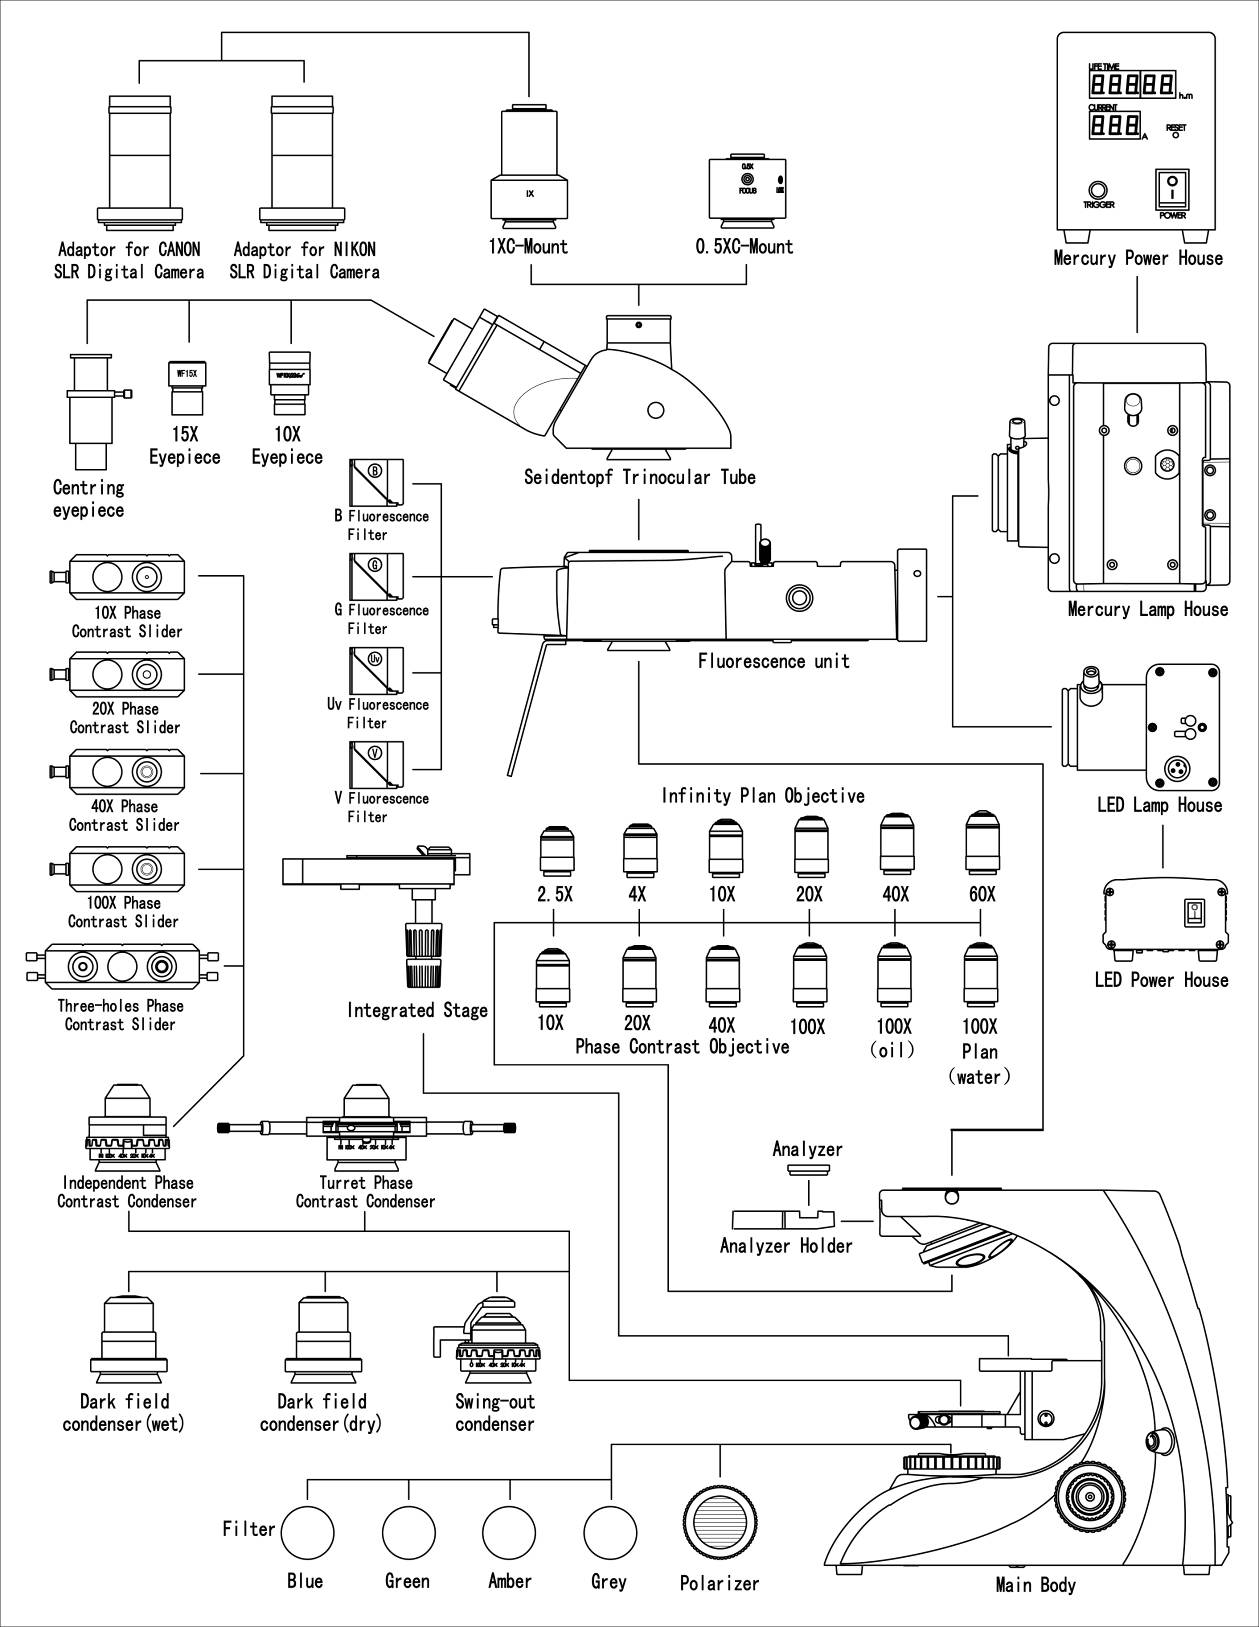 BS-2063F Layoutdiagram